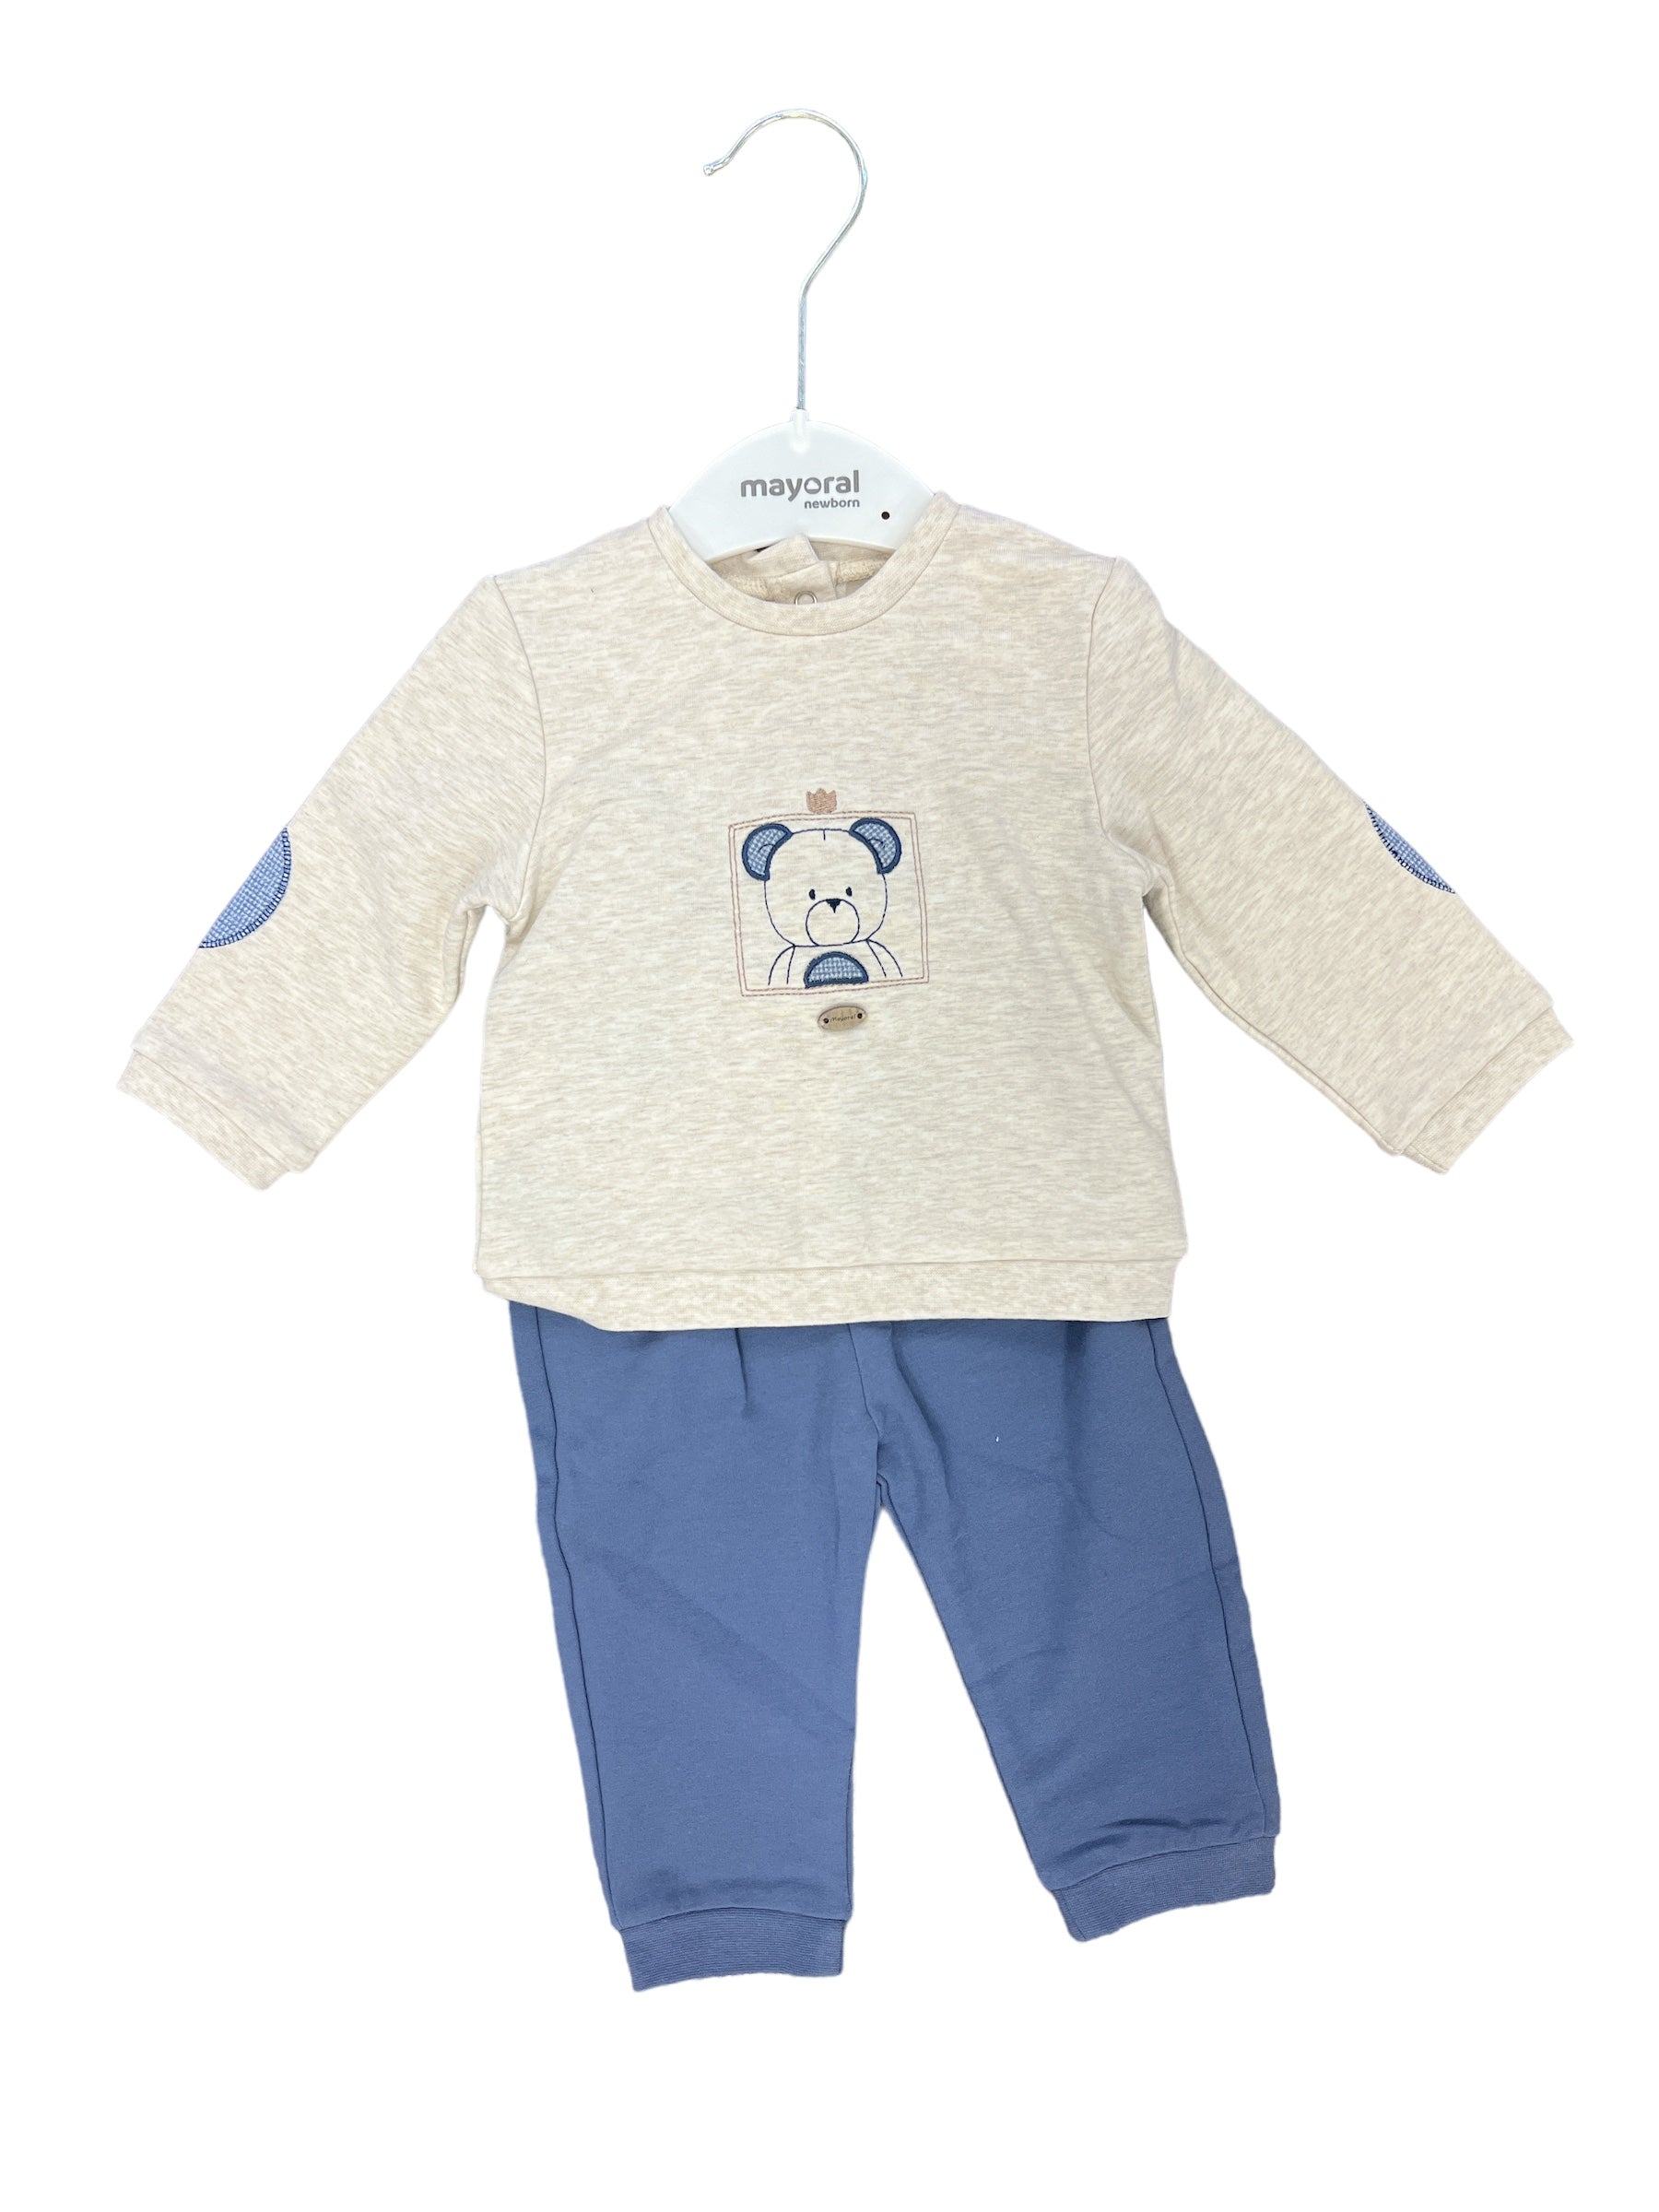 Bear Set-520 Baby & Kids Gifts-Simply Stylish Boutique-Simply Stylish Boutique | Women’s & Kid’s Fashion | Paducah, KY